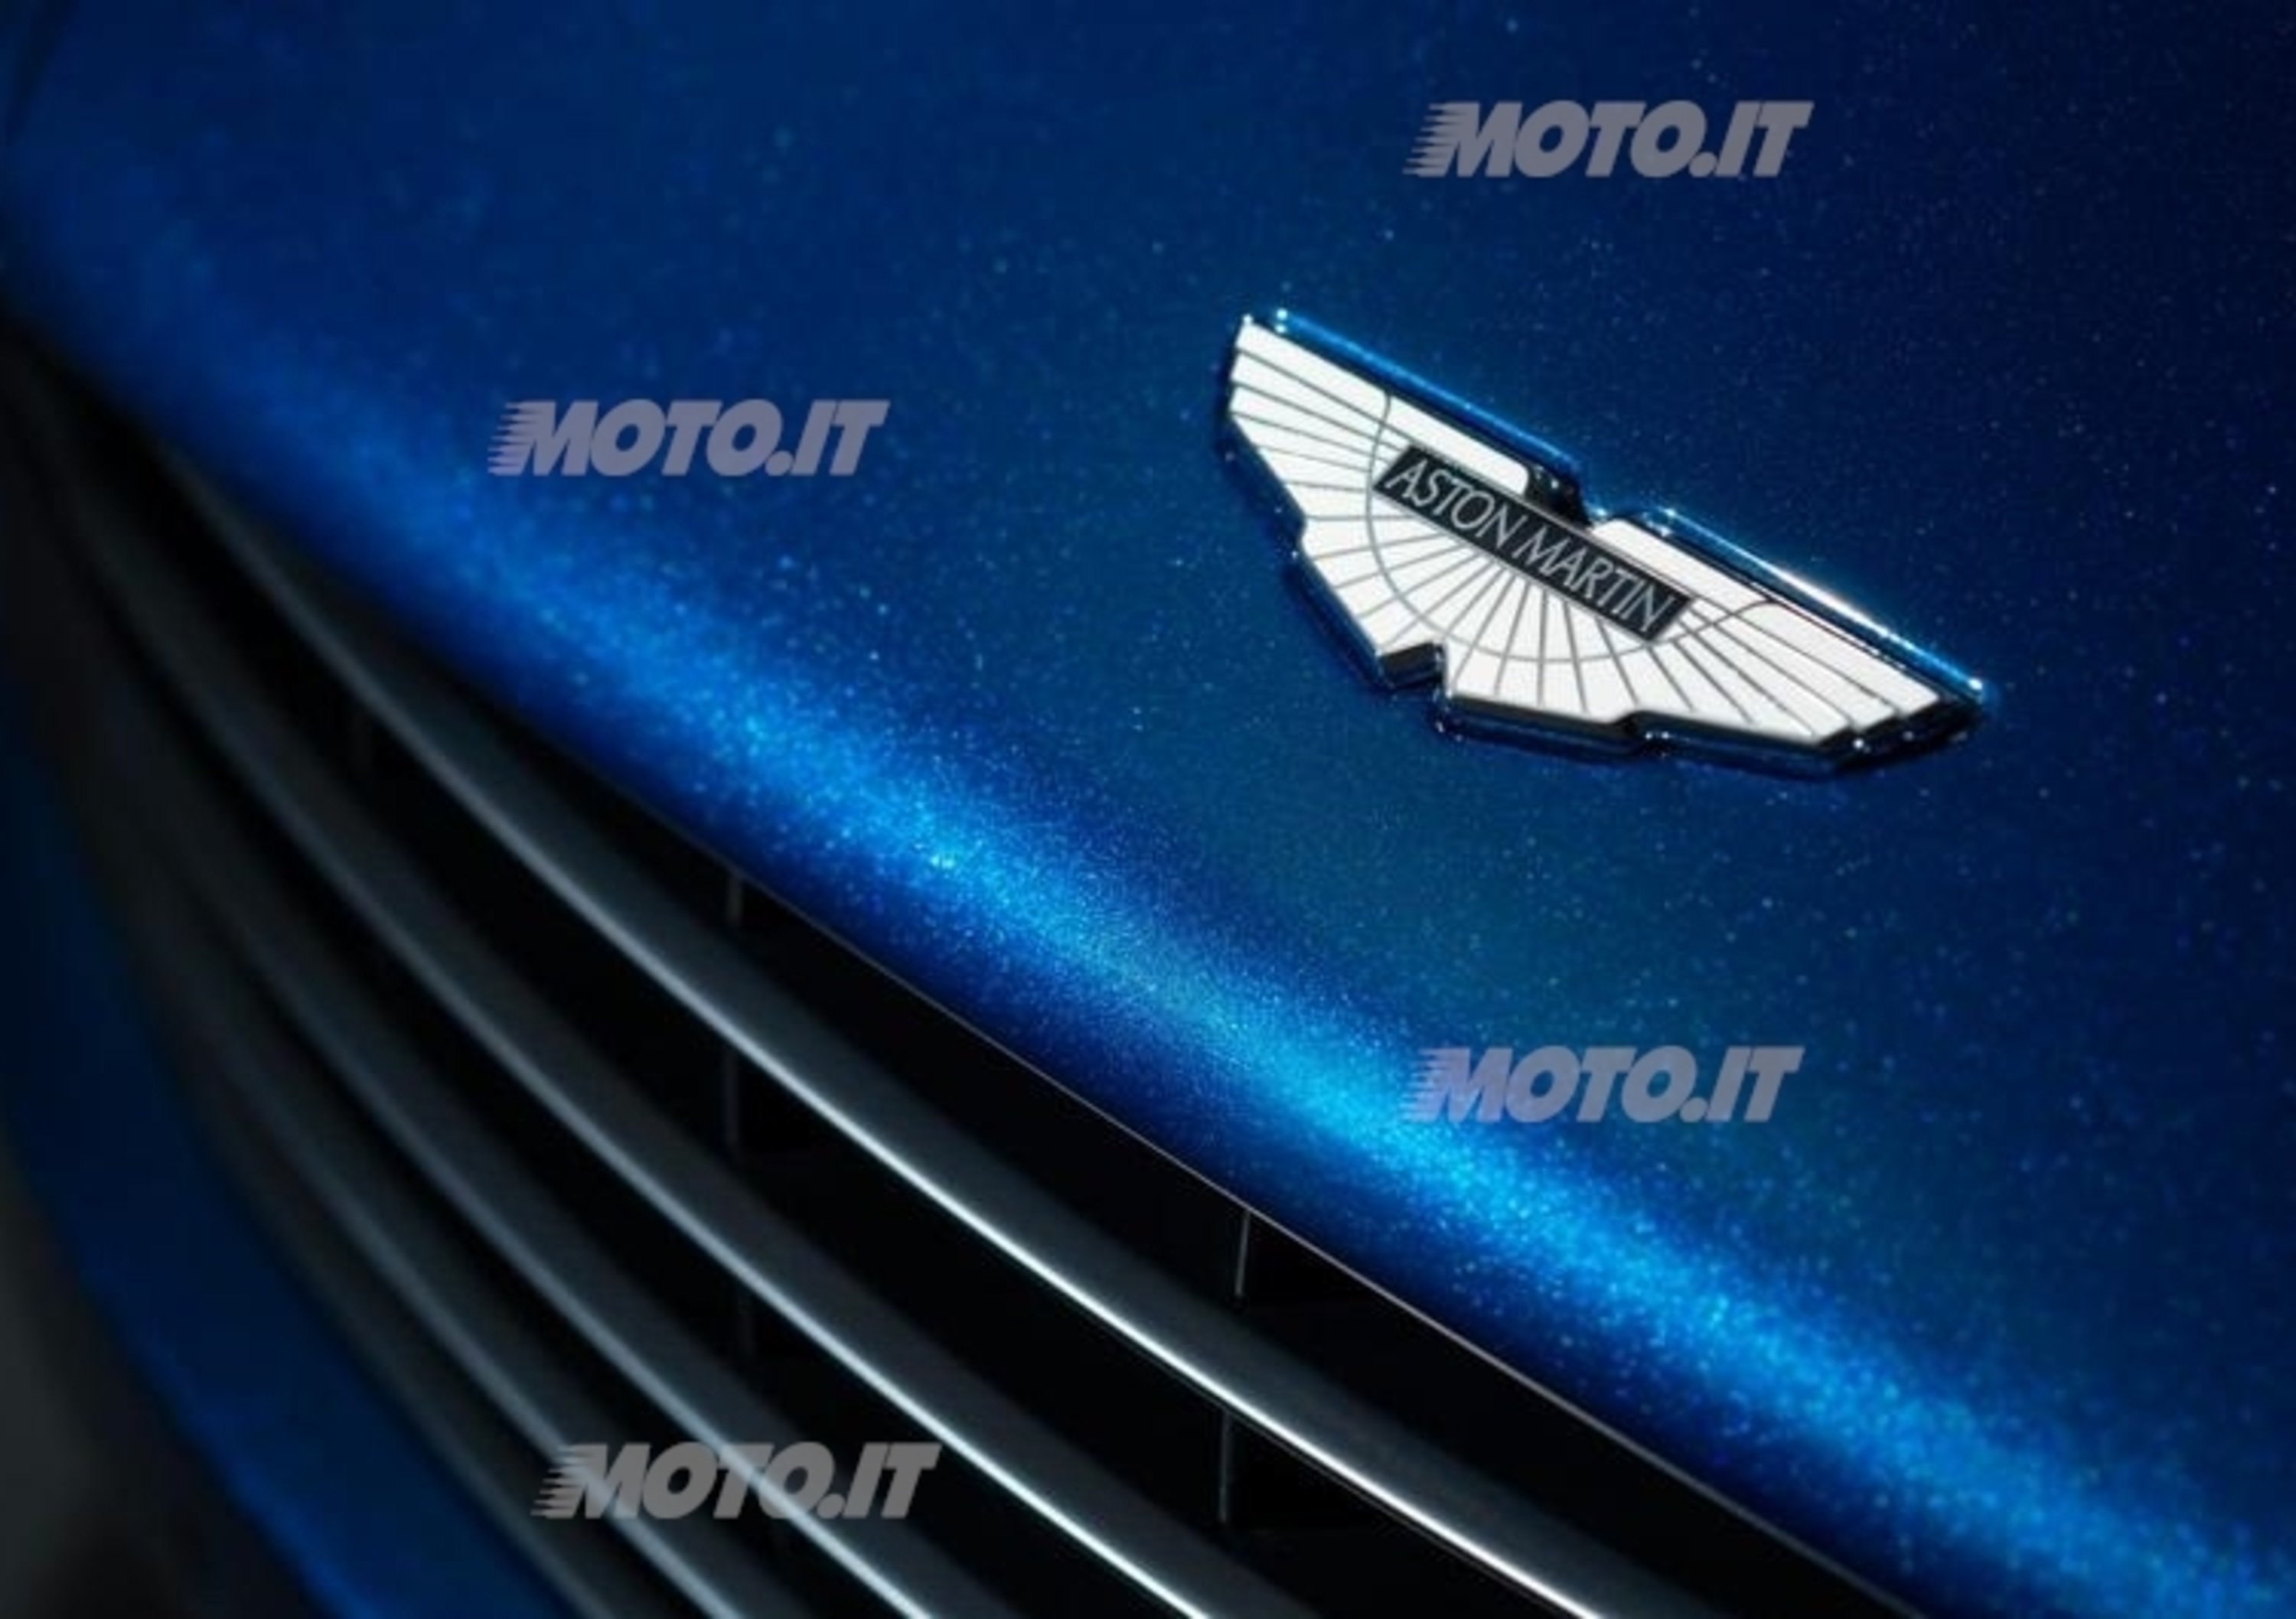 Aston Martin: richiamate 17.950 vetture